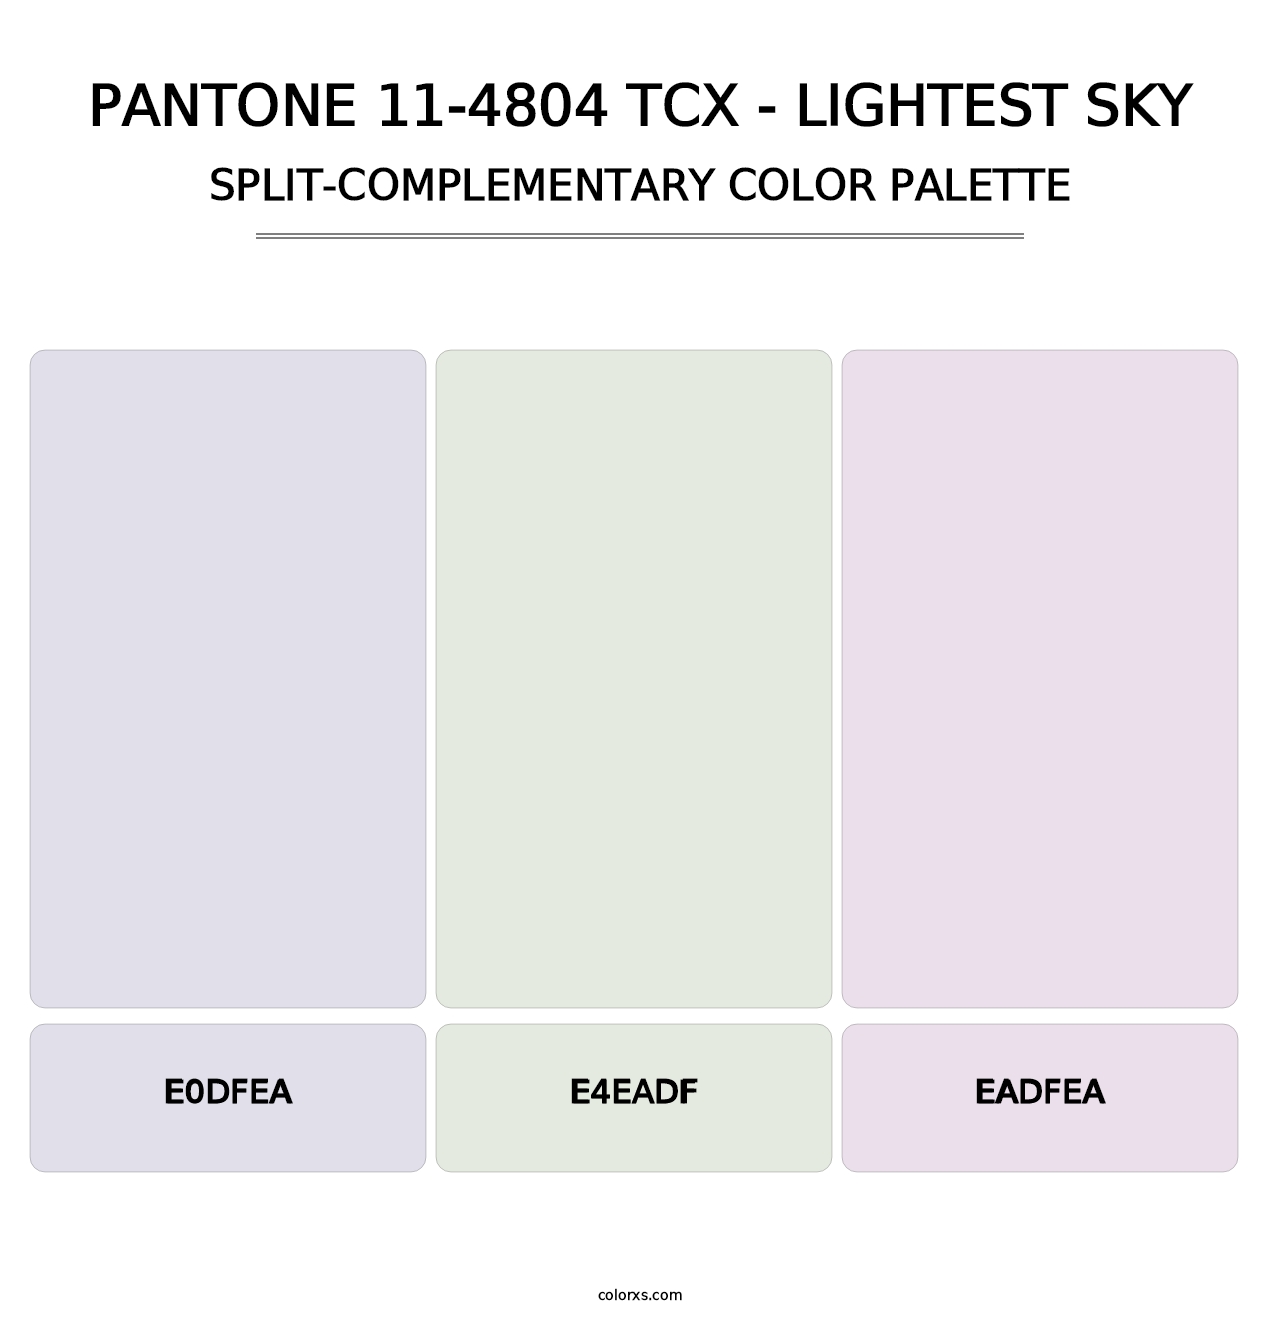 PANTONE 11-4804 TCX - Lightest Sky - Split-Complementary Color Palette